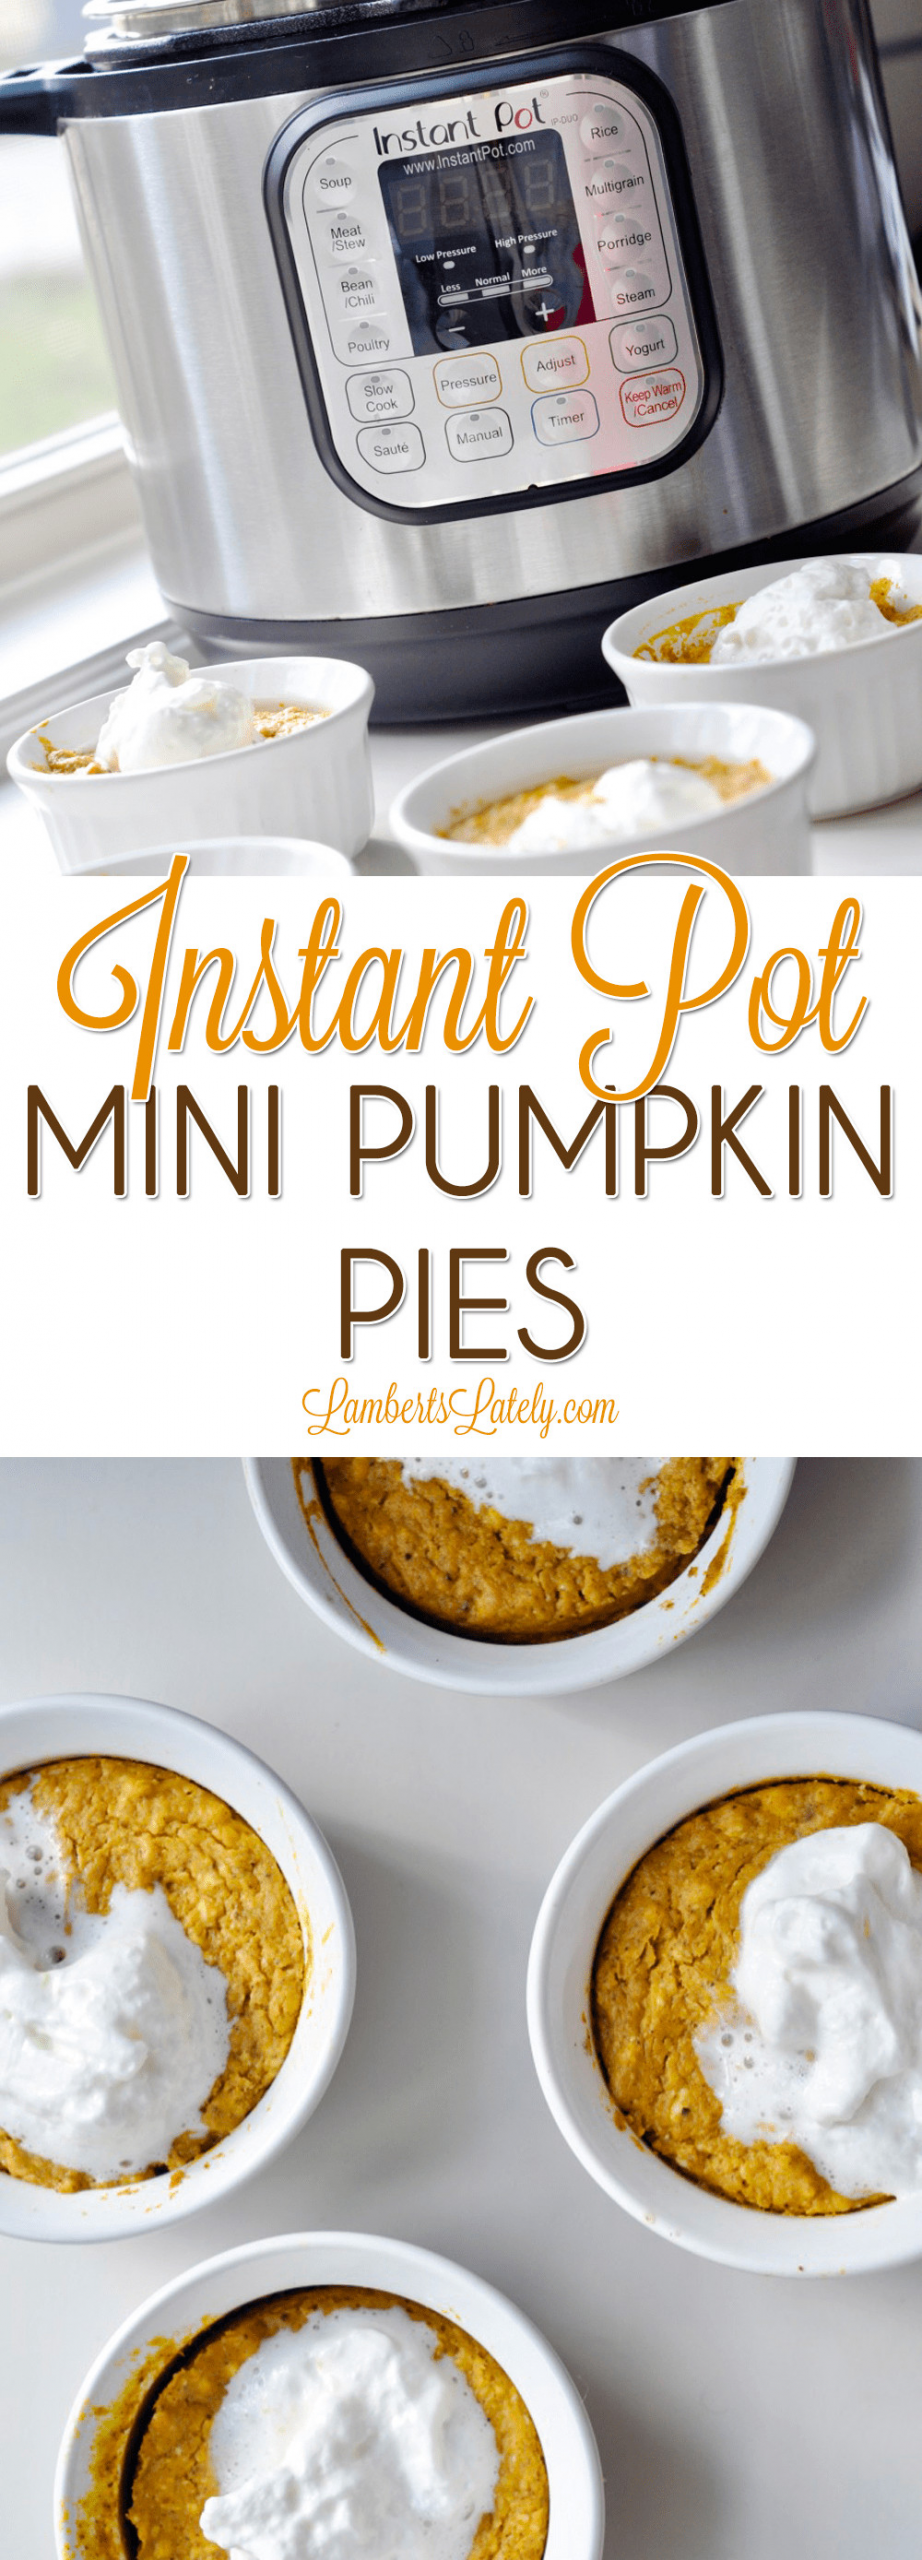 Instant Pot Pumpkin Pie
 Instant Pot Mini Pumpkin Pies